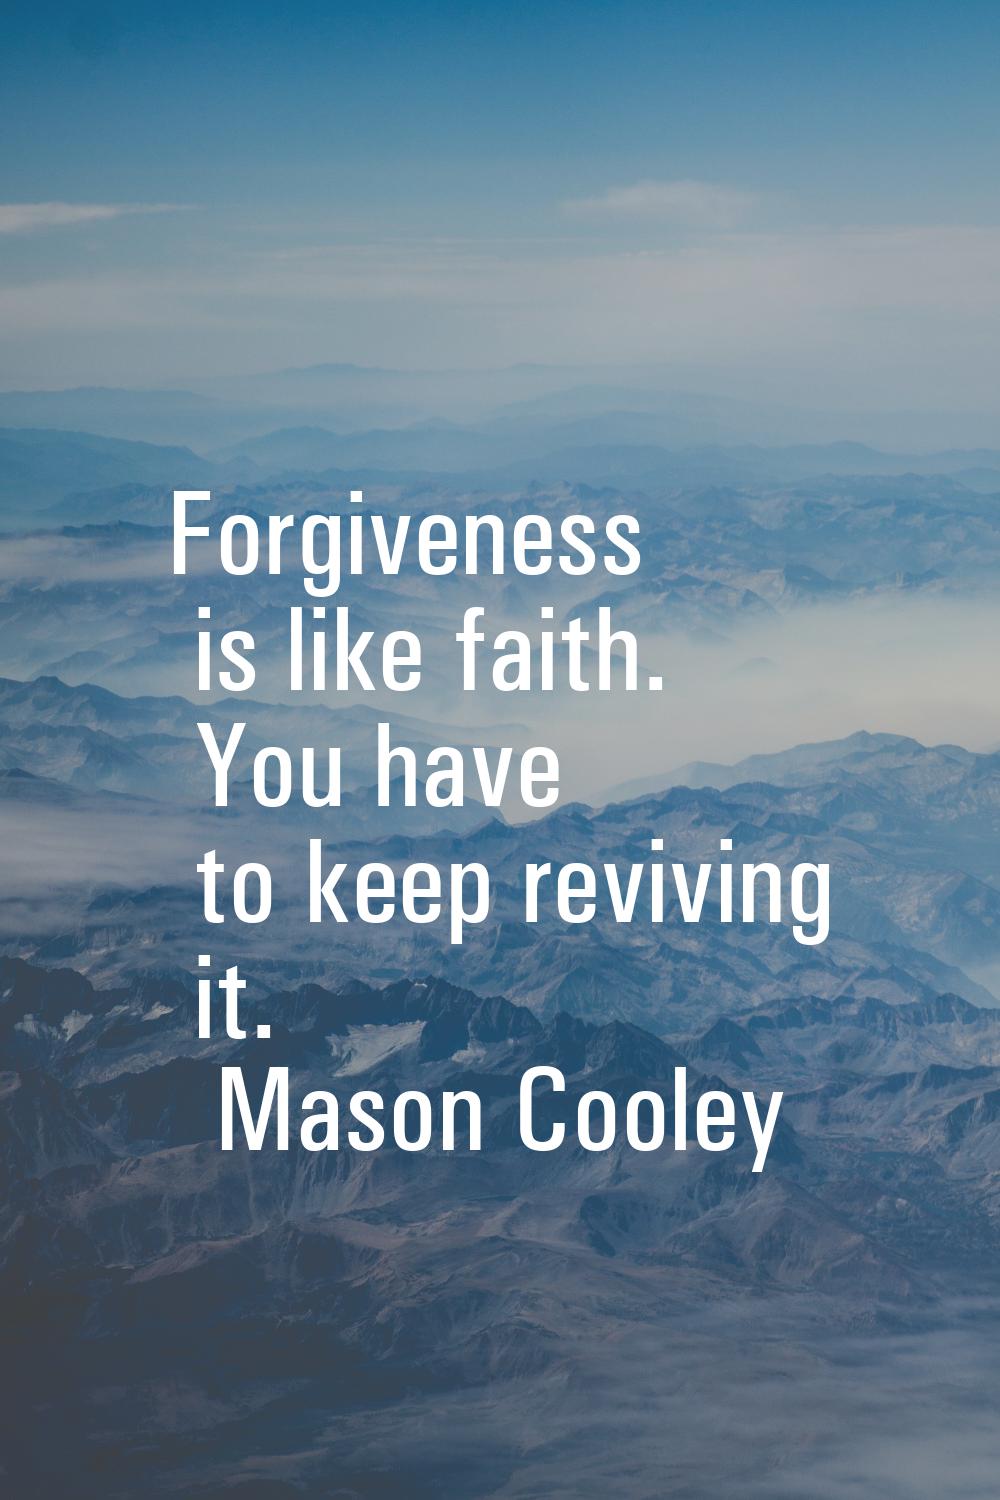 Forgiveness is like faith. You have to keep reviving it.